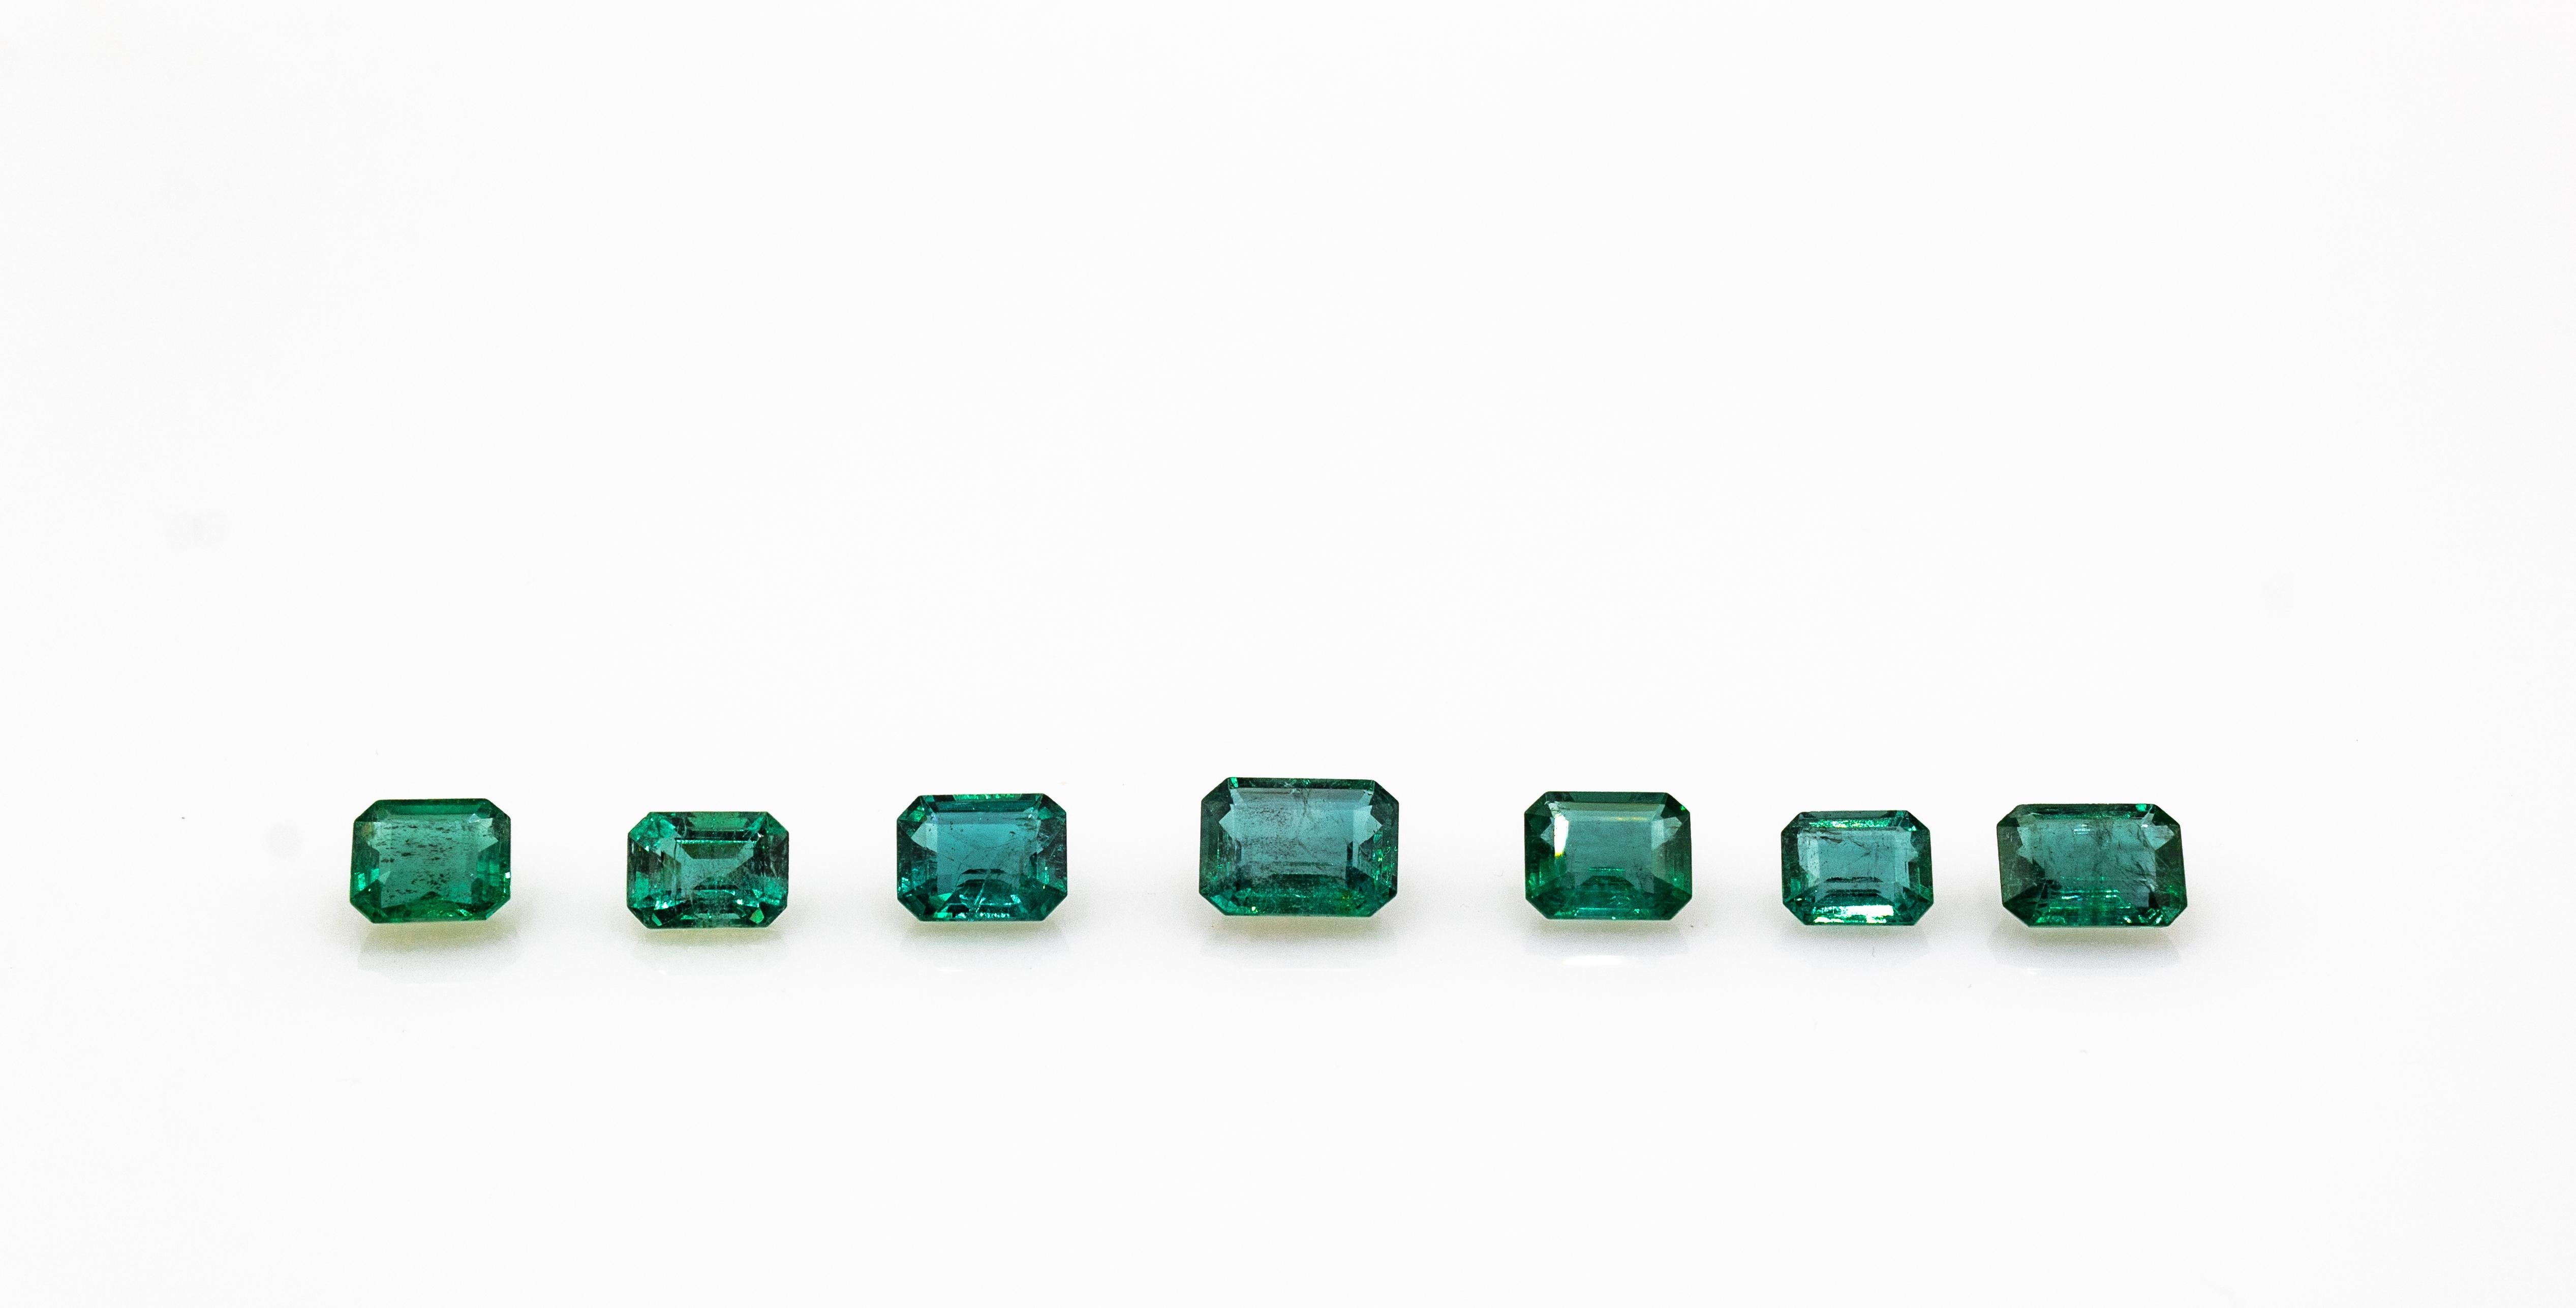 Certifiable Zambia Octagon Cut 2.98 Carat Emerald Loose Gemstone 1